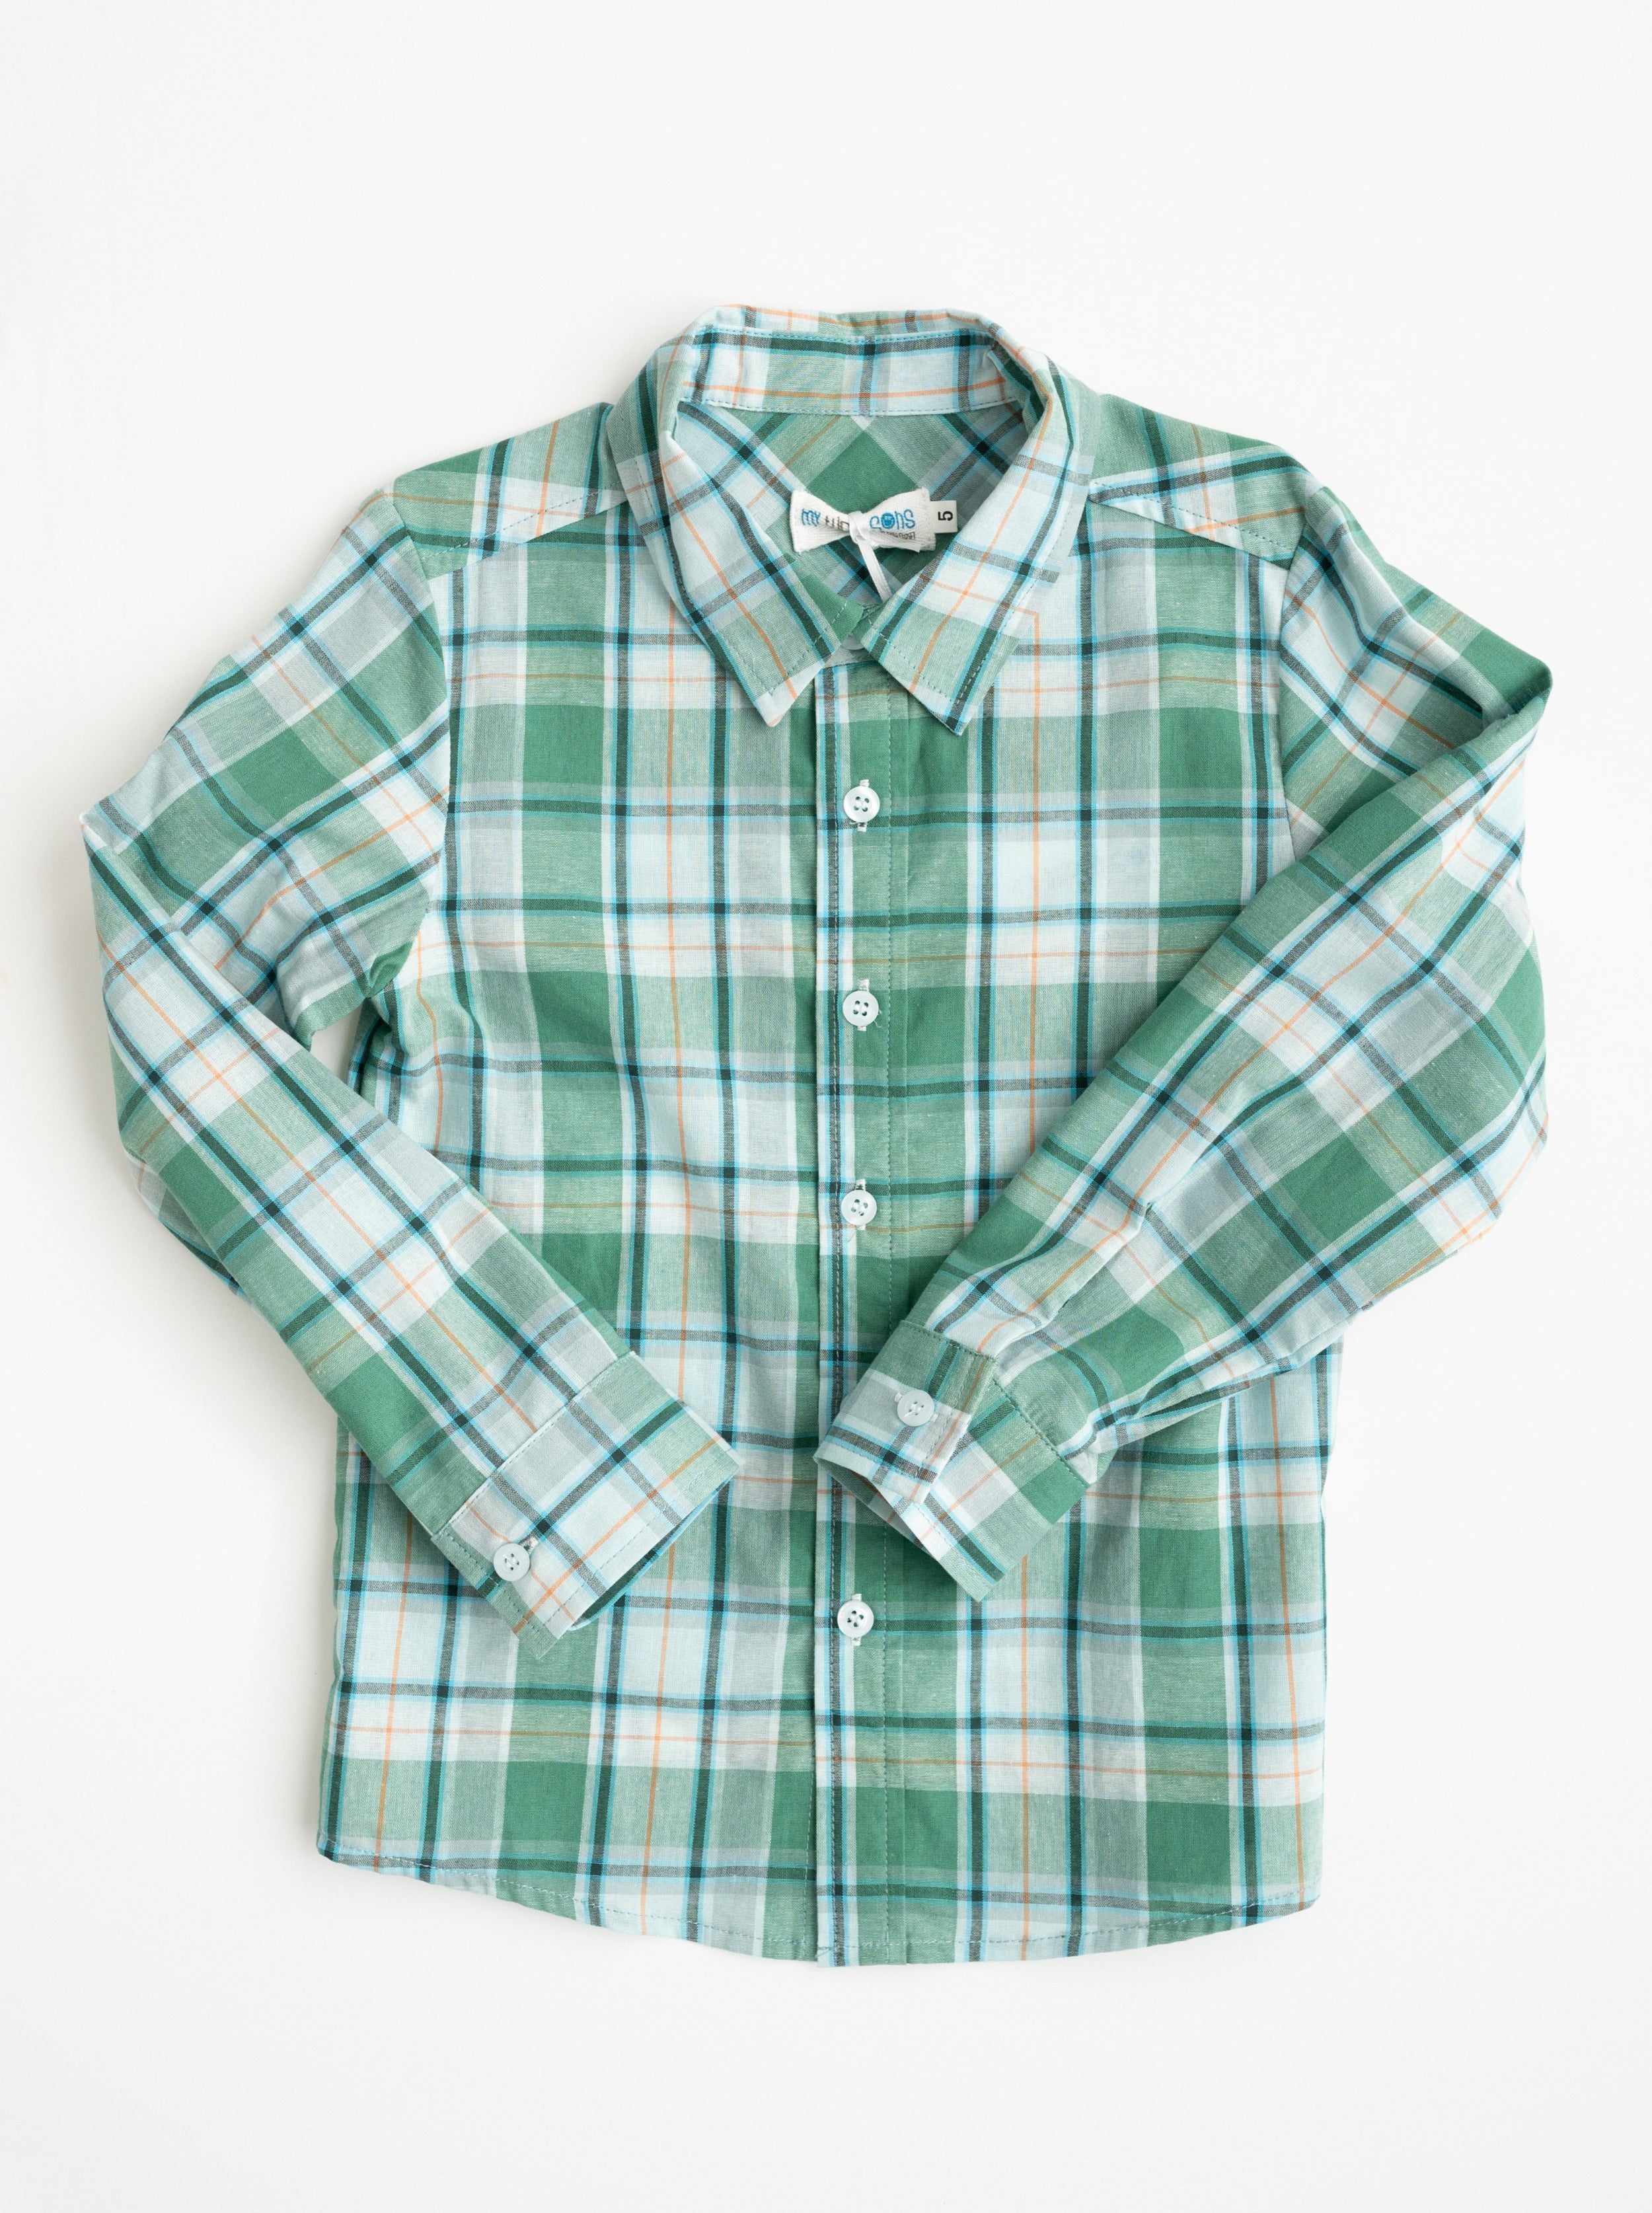 Wintergreen Boys Shirt - Evie's Closet Clothing